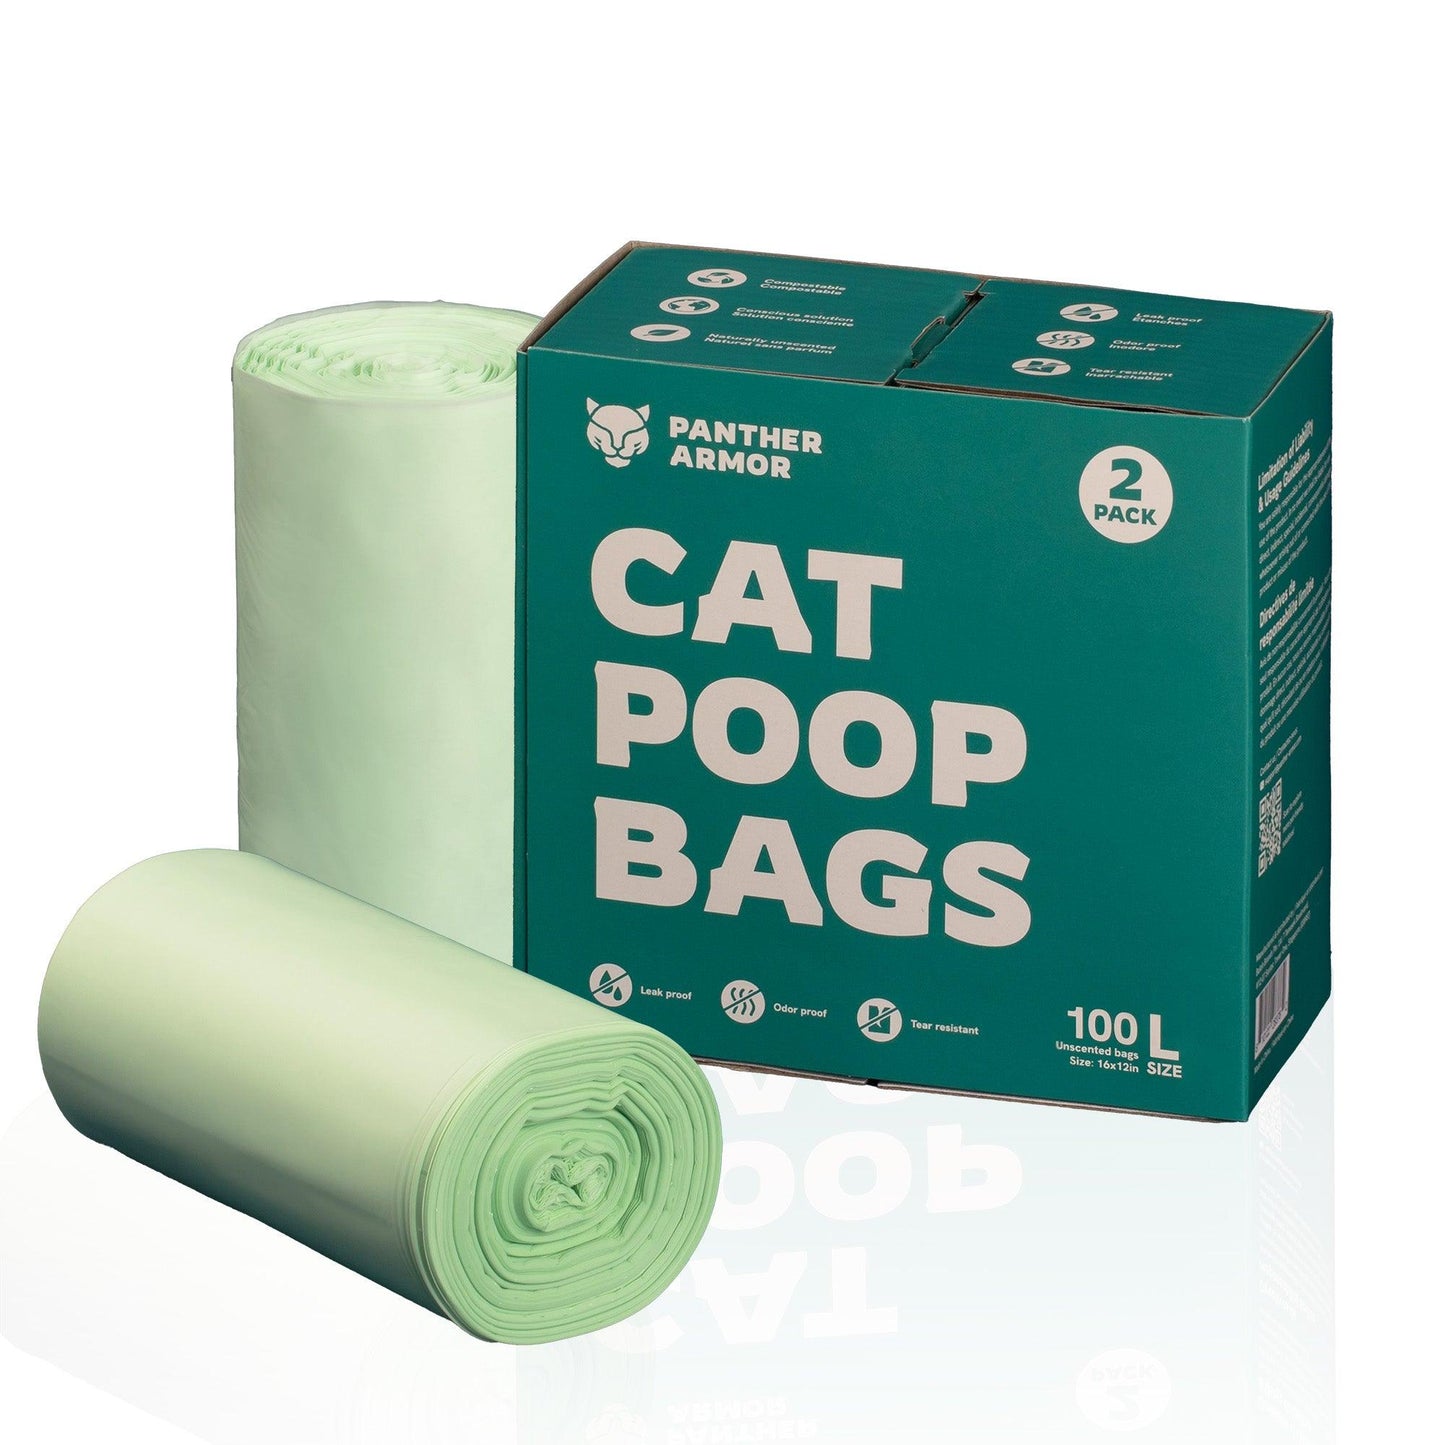 Cat Poop Bags